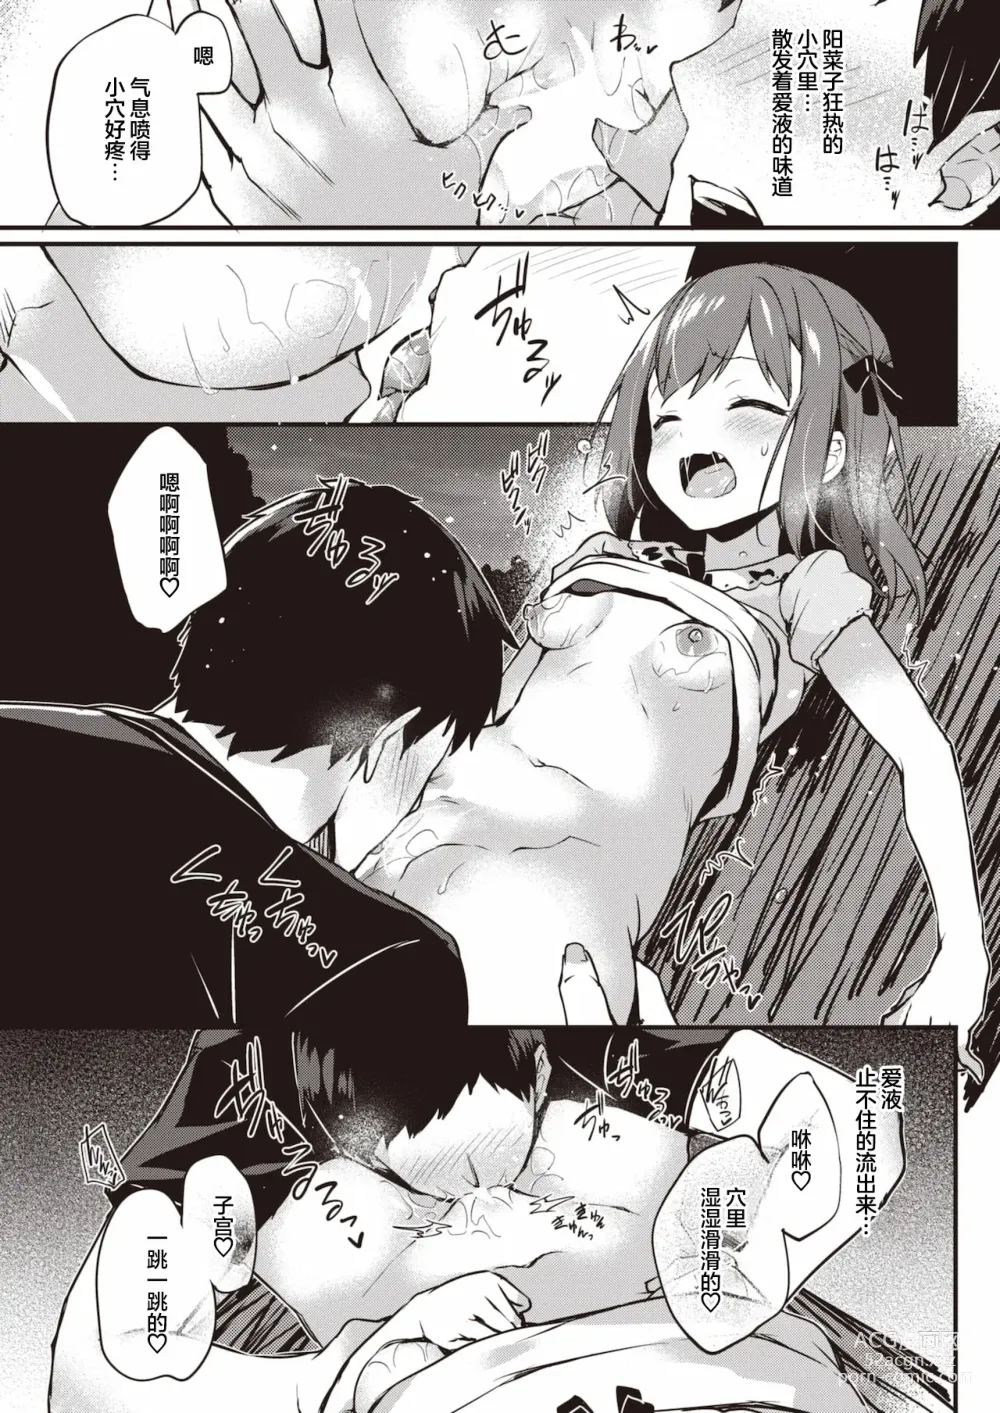 Page 13 of manga 崭新的我